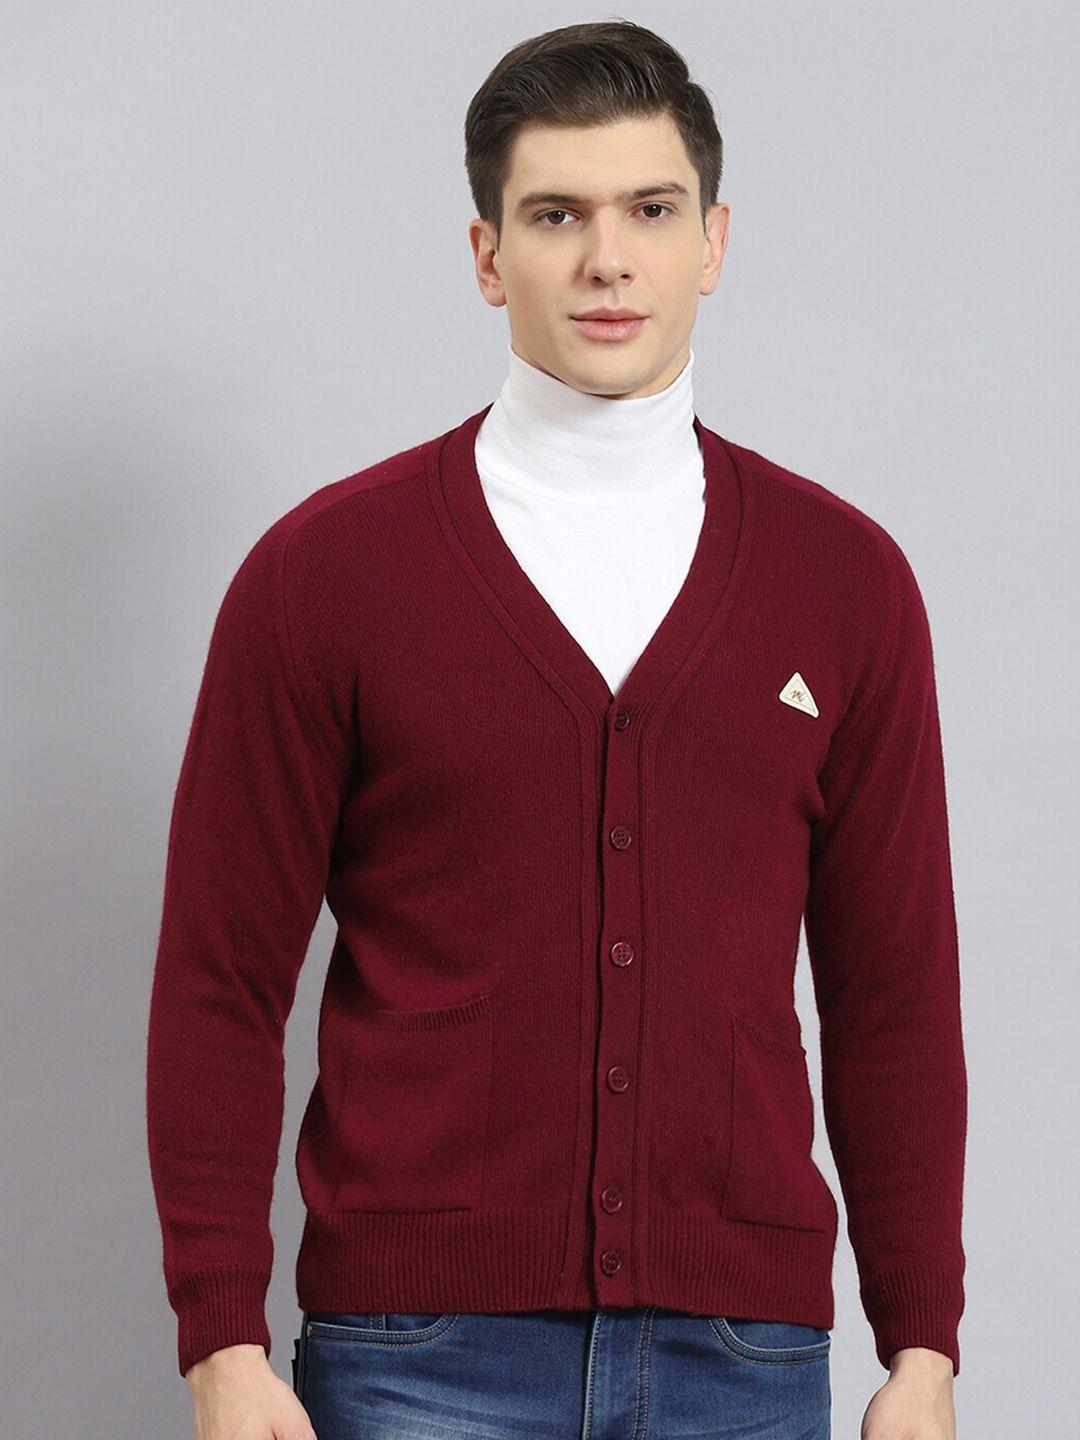 monte carlo v-neck woollen cardigan sweater